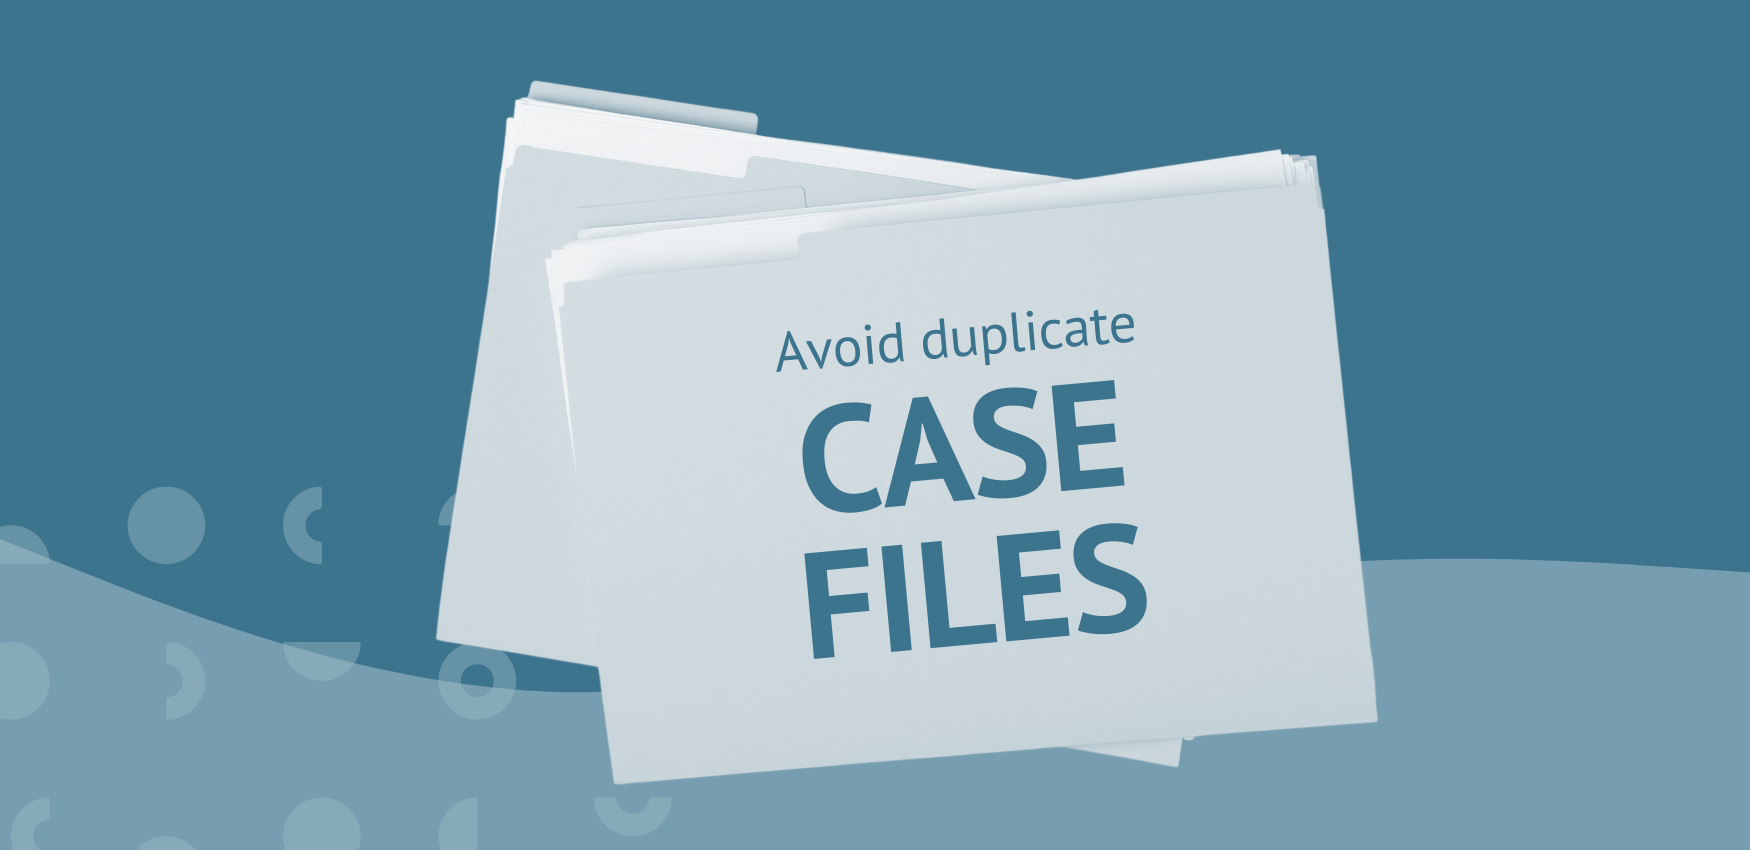 3 Ways to Avoid Duplicate Case Files